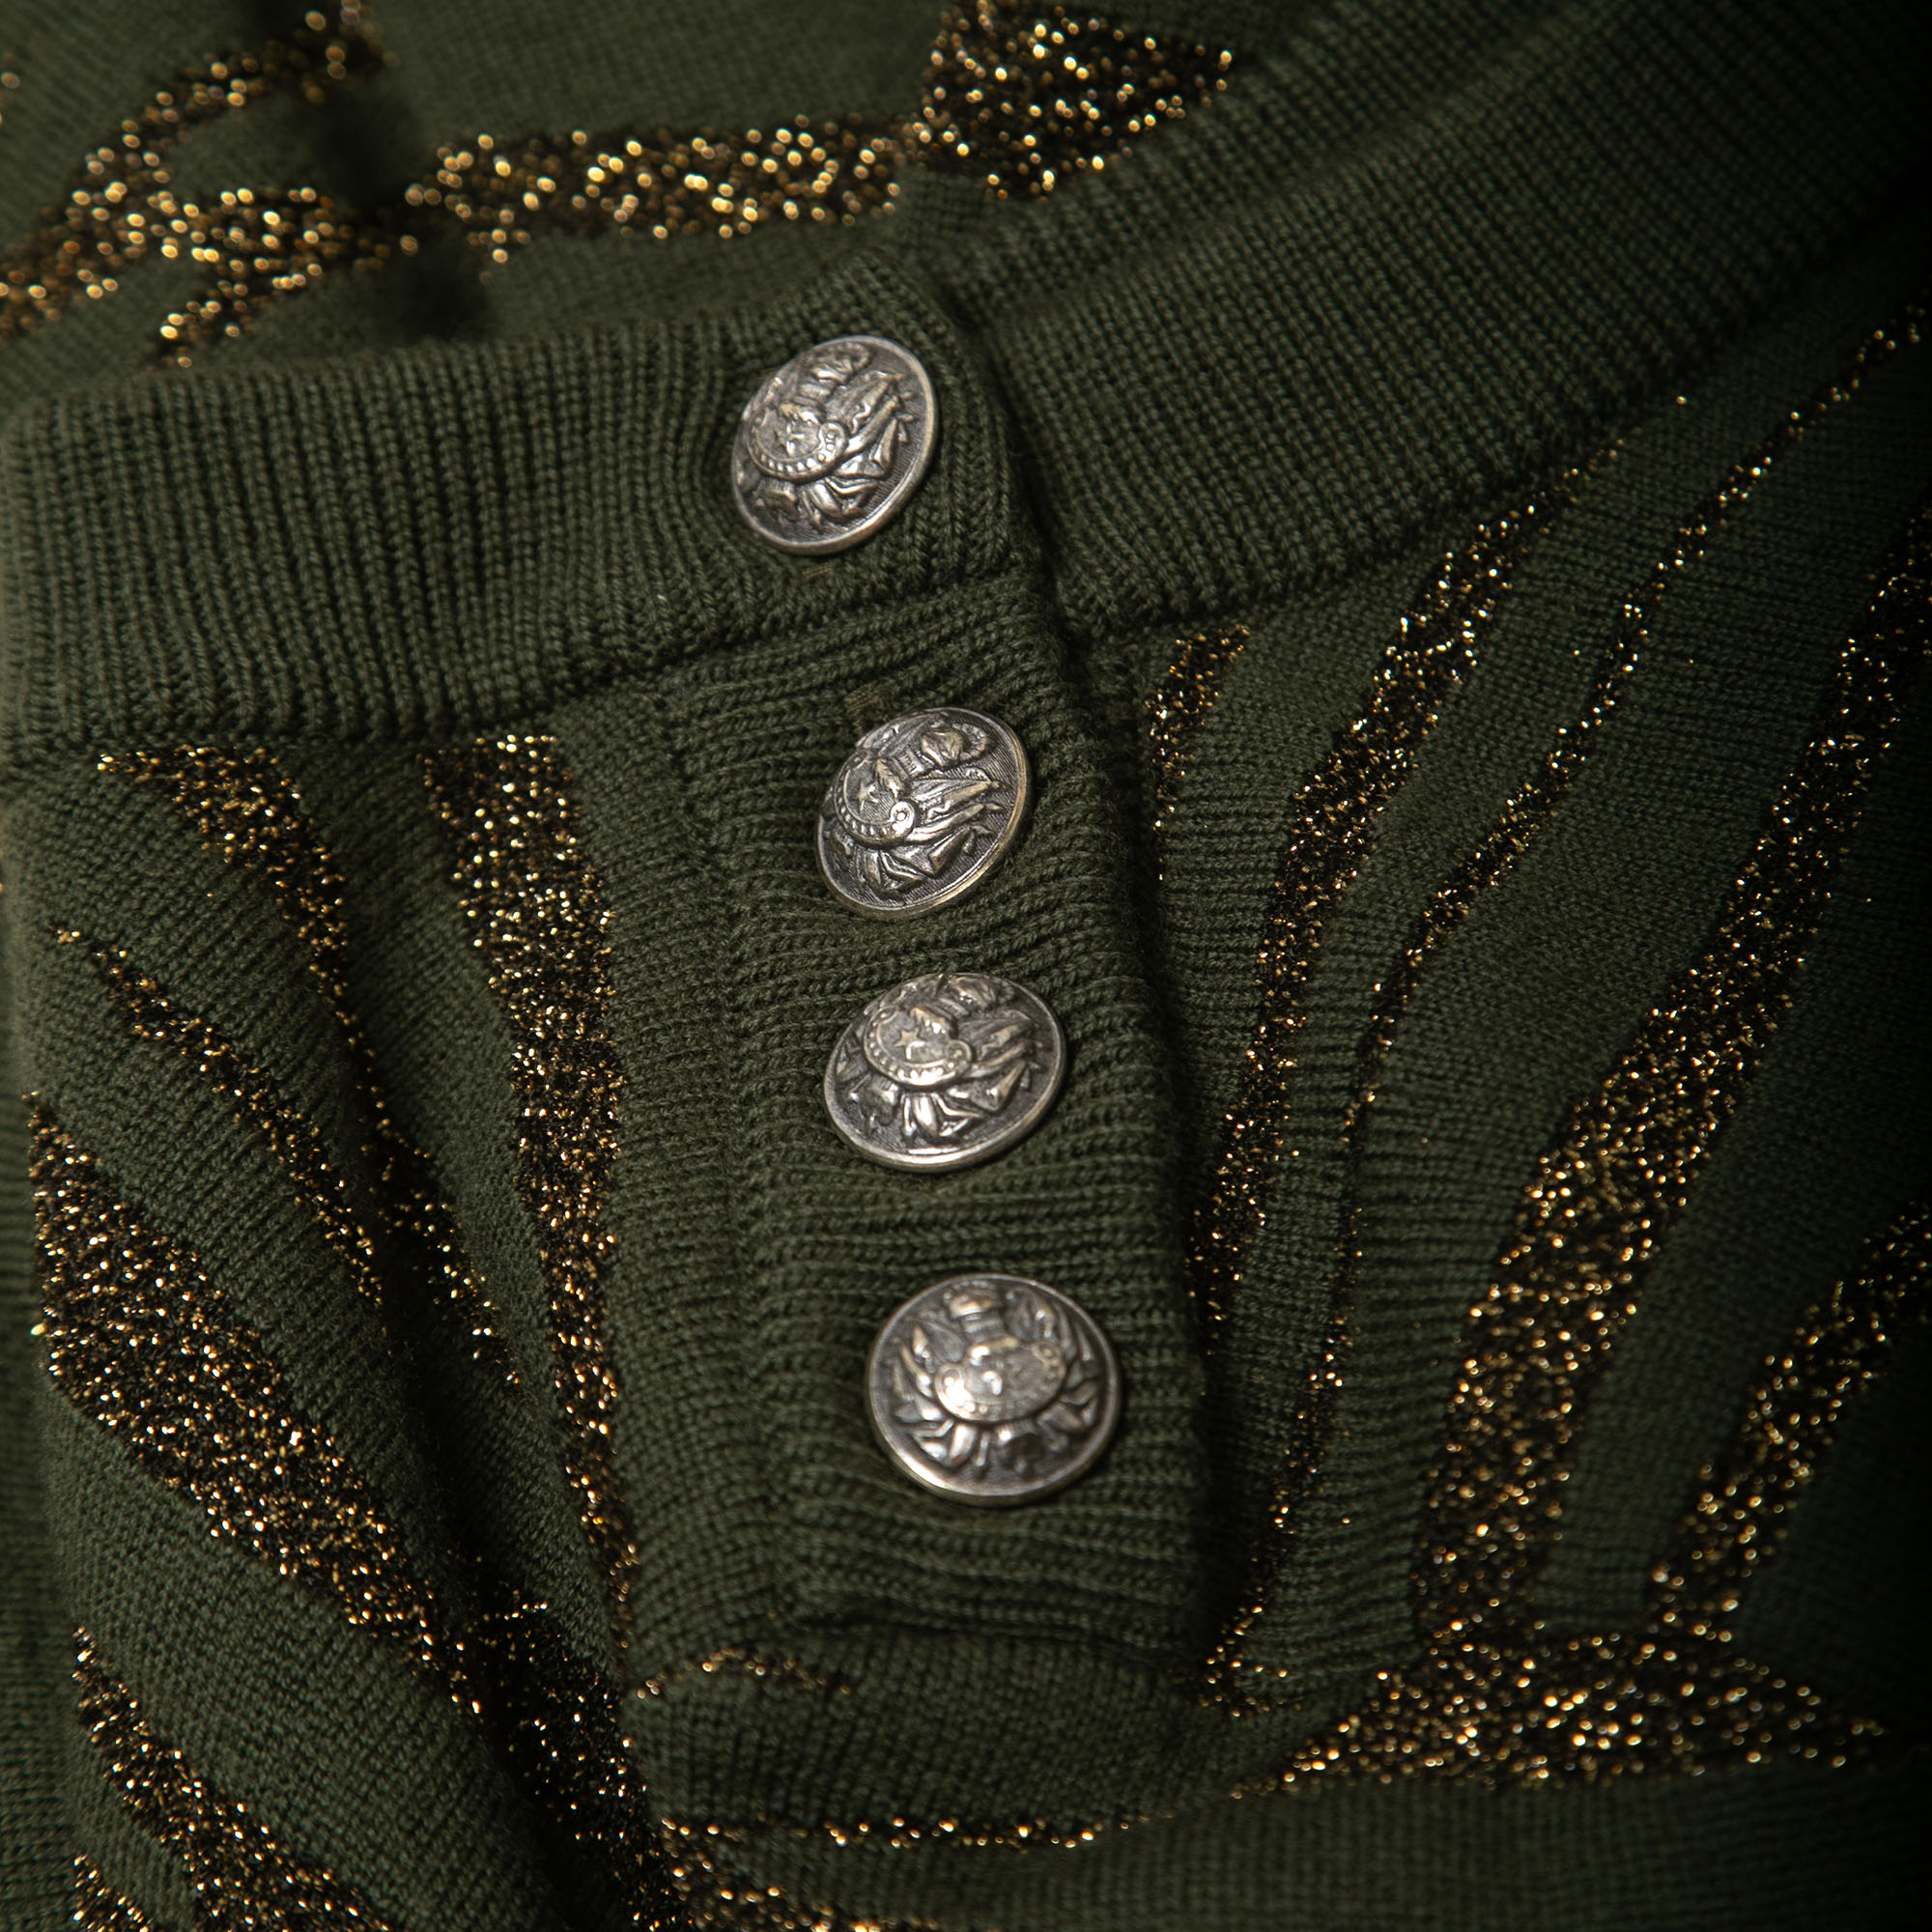 Balmain Green/Metallic Patterned Knit Button Detail Sweater XS